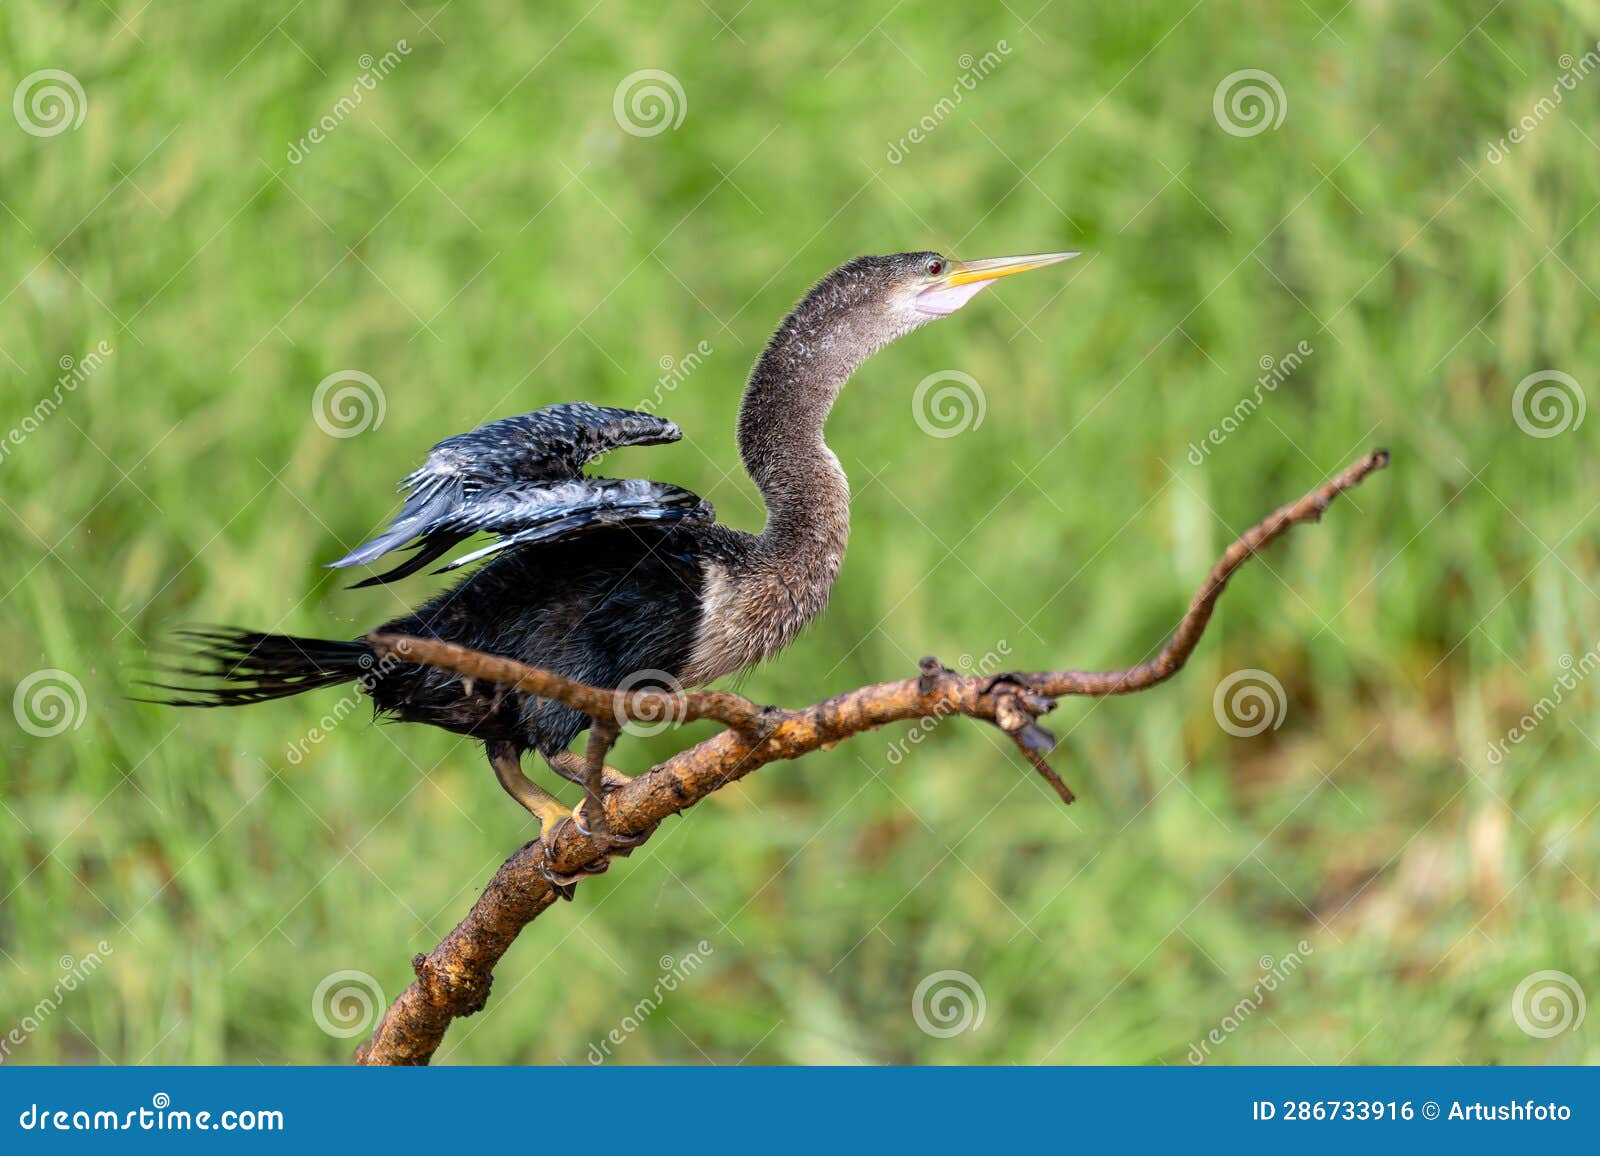 snakebird, darter, american darter, or water turkey, anhinga anhinga, costa rica